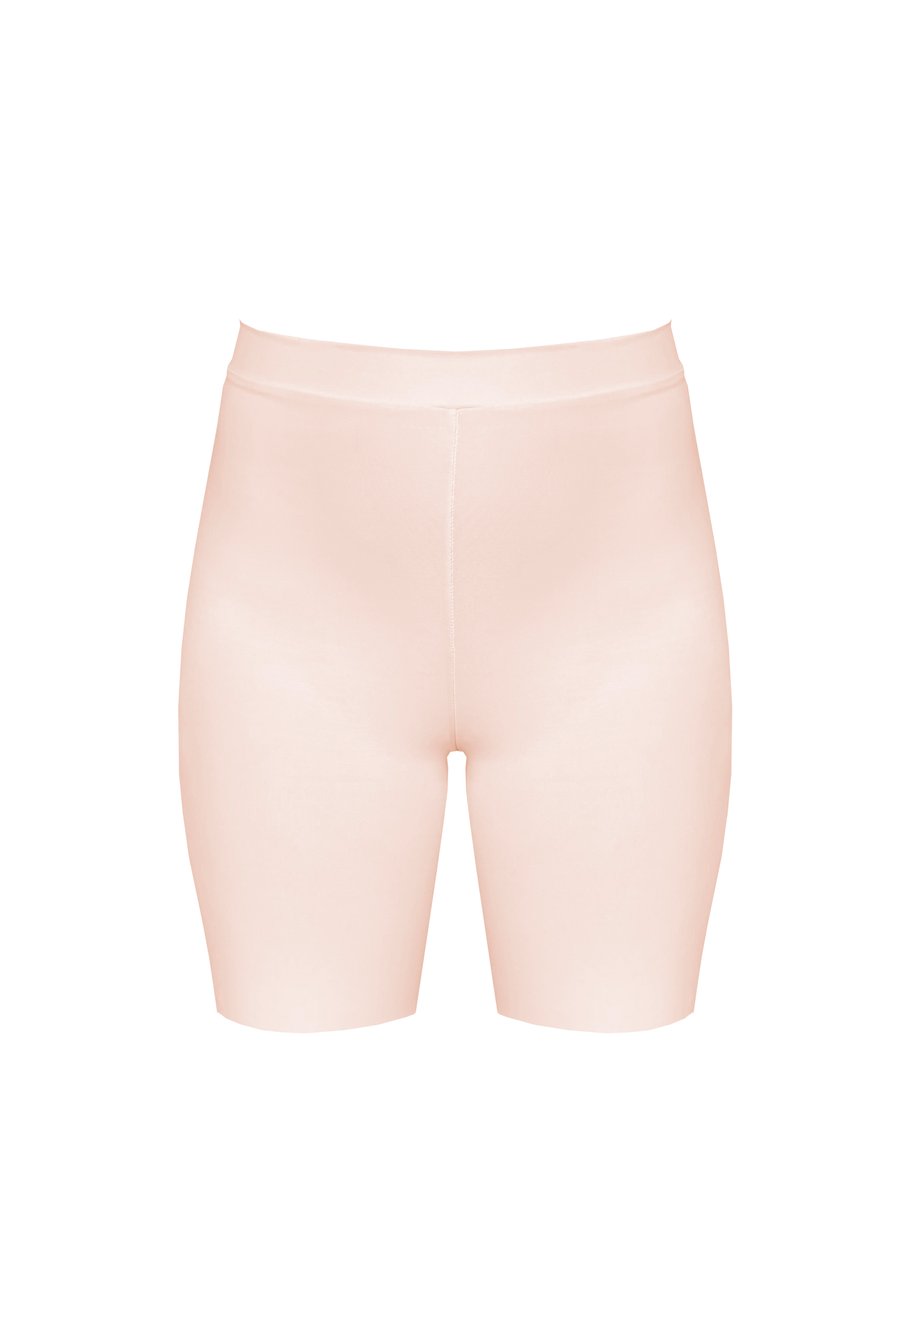 Image of Streamlined Biker Shorts - Peach